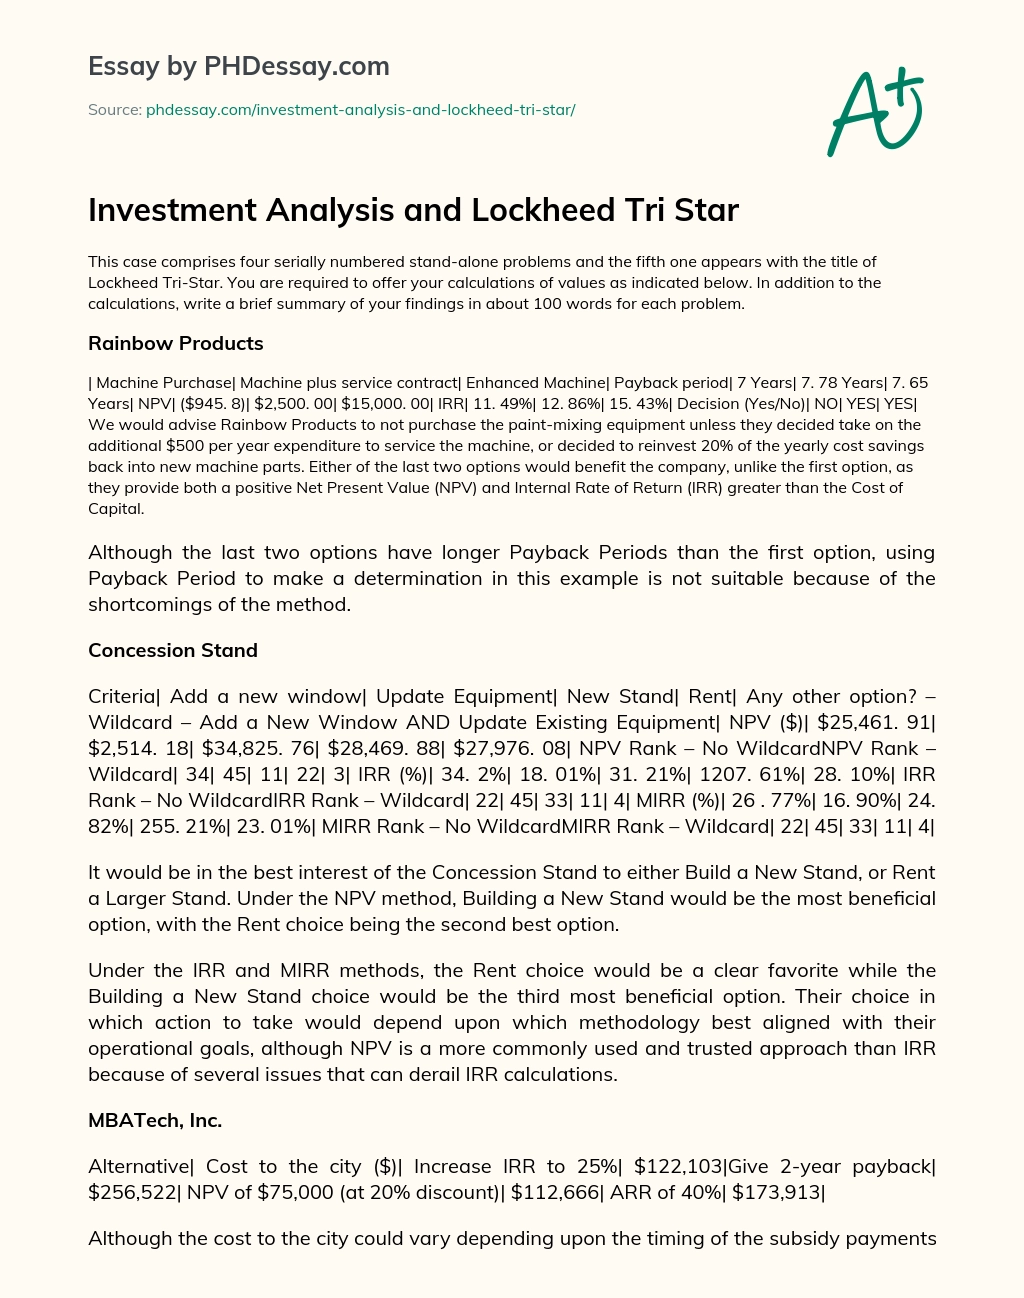 Investment Analysis and Lockheed Tri Star essay